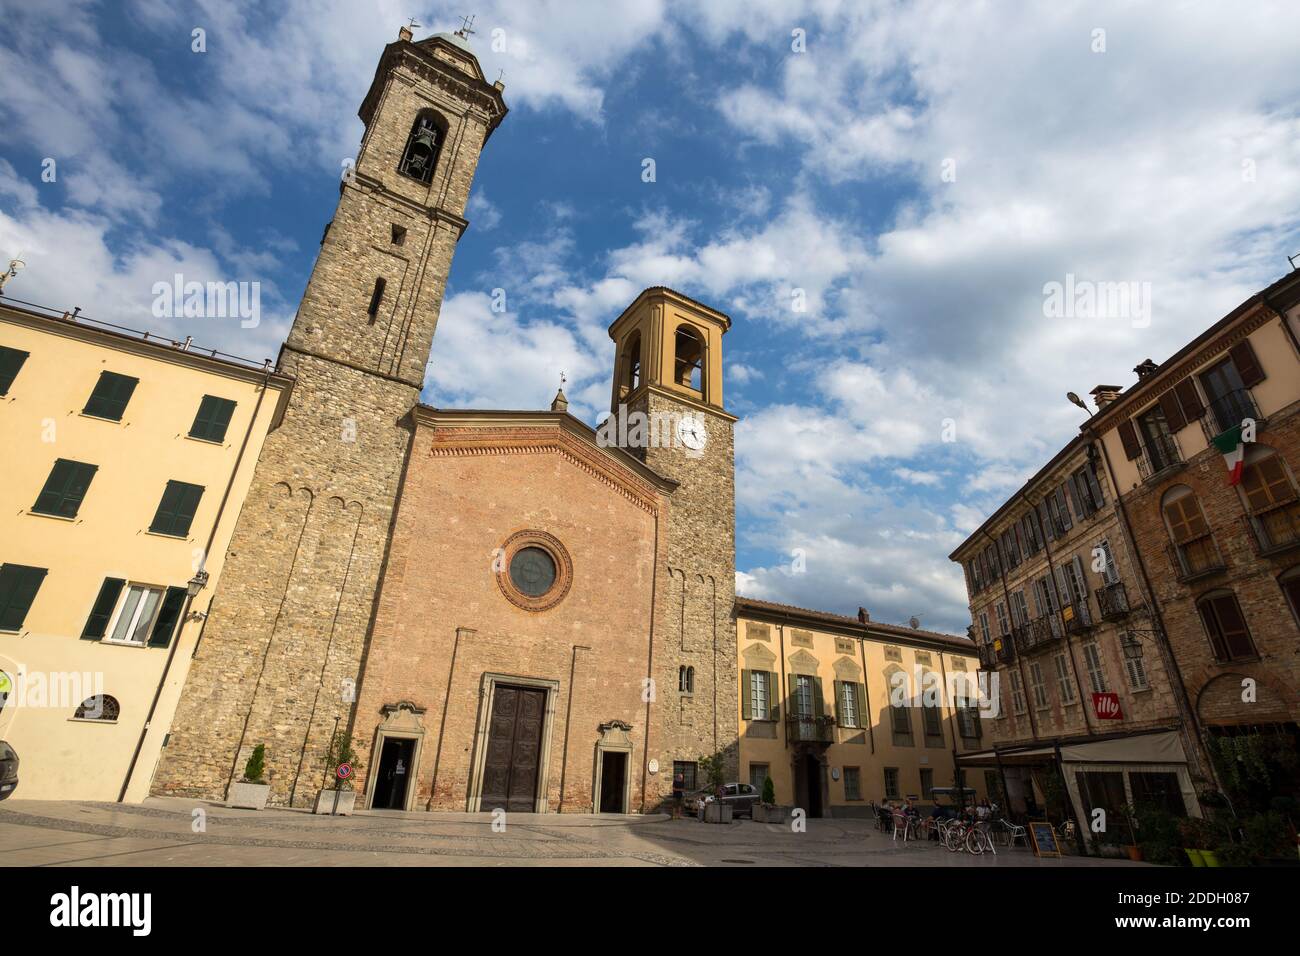 BOBBIO, ITALY, AUGUST 20, 2020 - The cathedral of Bobbio, Santa Maria Assunta, is a parish church of Bobbio in the province of Piacenza, Italy. Stock Photo